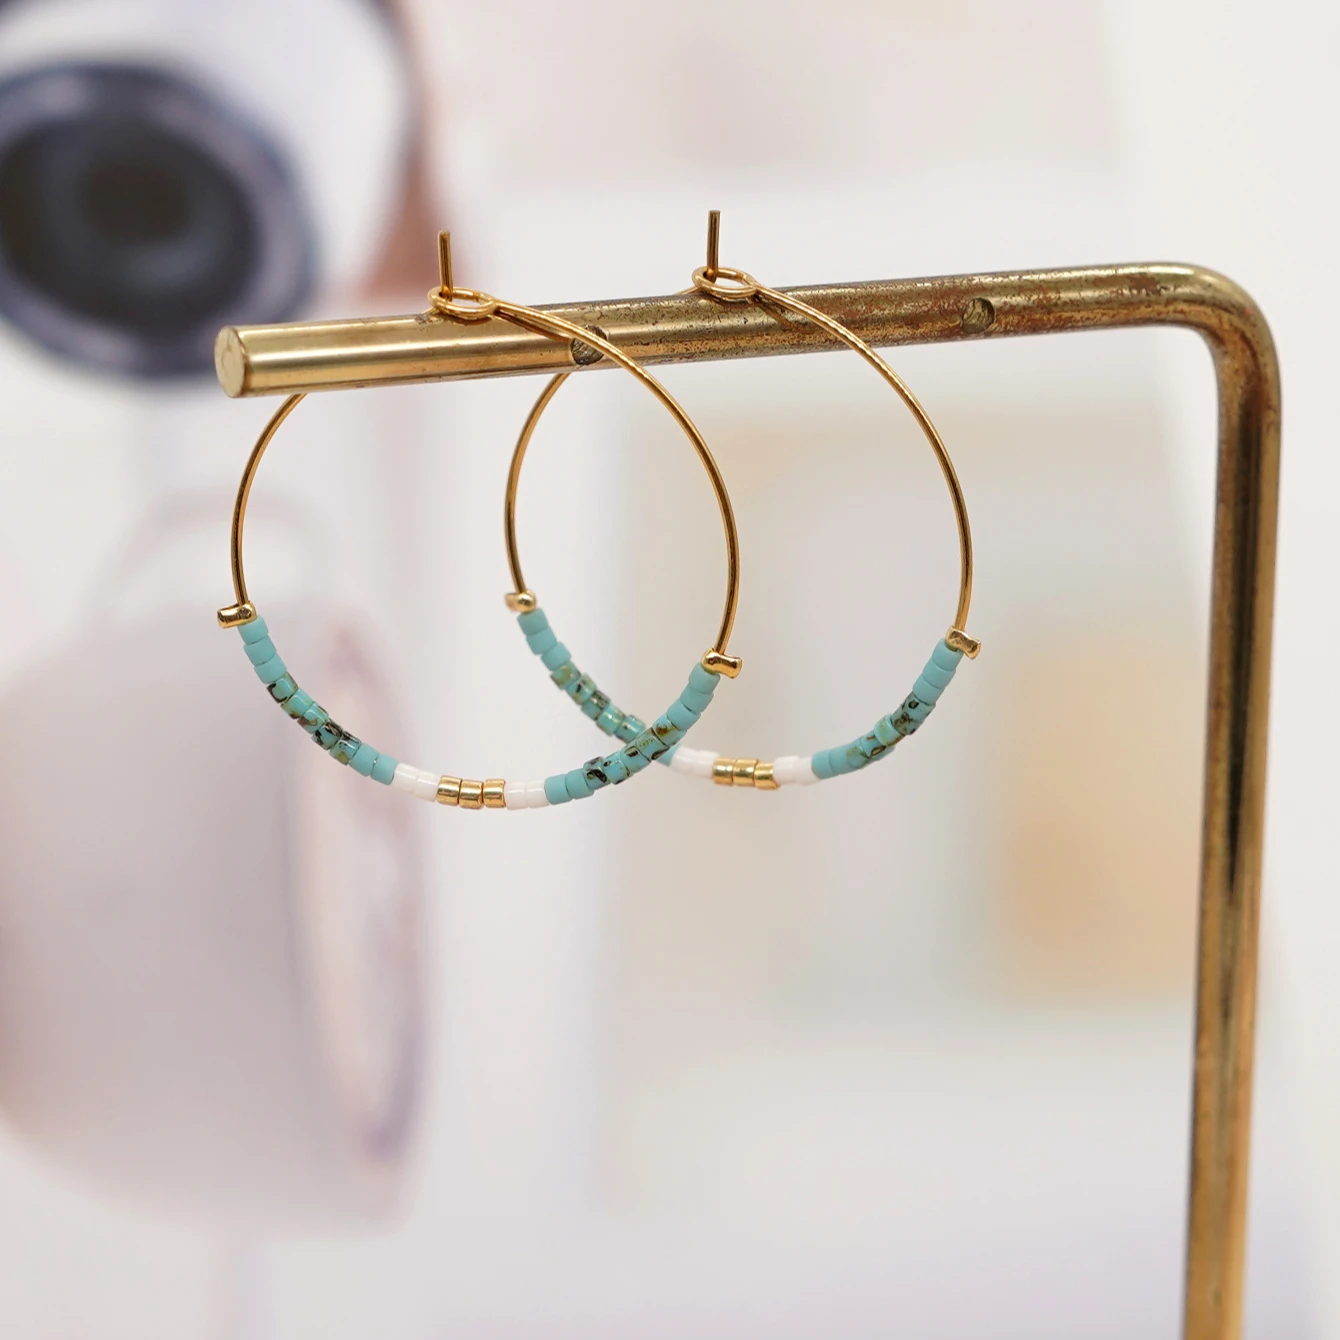 

YASTYT Hoop Earrings For Women 316L Stainless Steel Earing Miyuki Bead Handmade Boho Jewelry New In Fashion